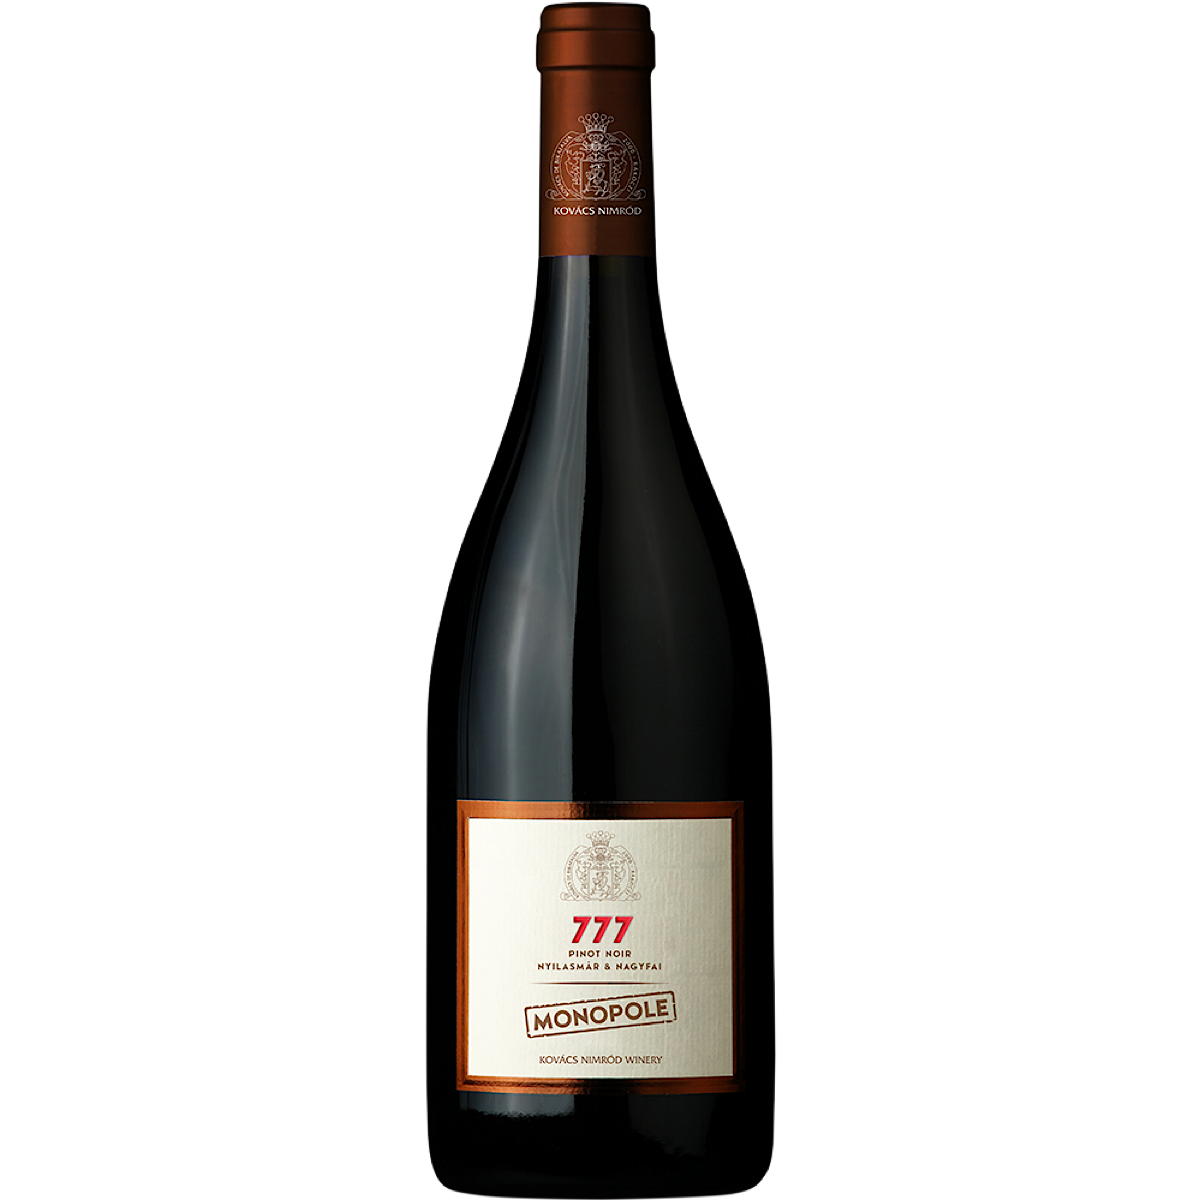 Kovács Nimród Monopole 777 Pinot Noir 6 Bottle Case 75cl